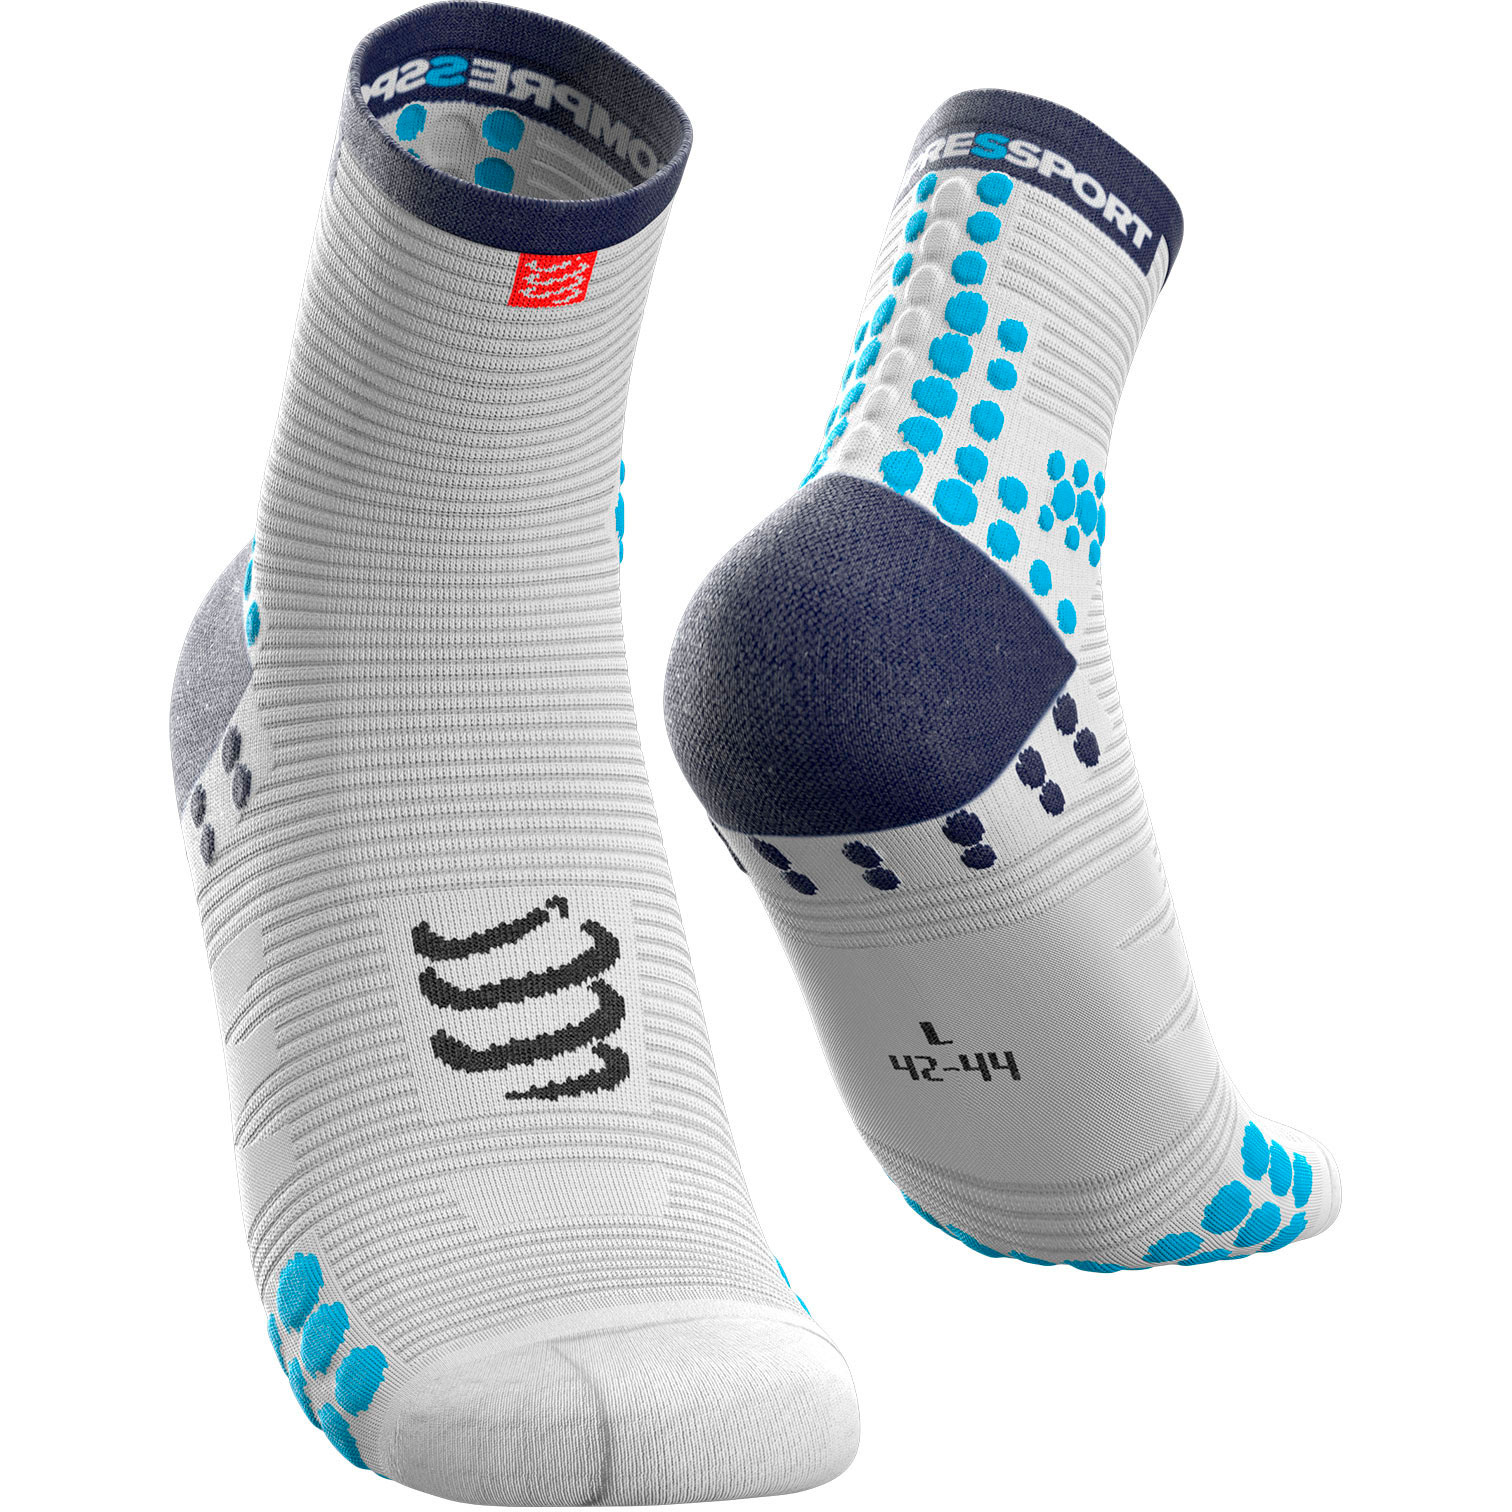 Шкарпетки компресійні Compressport Pro Racing Socks V3.0 Run High, White/Blue